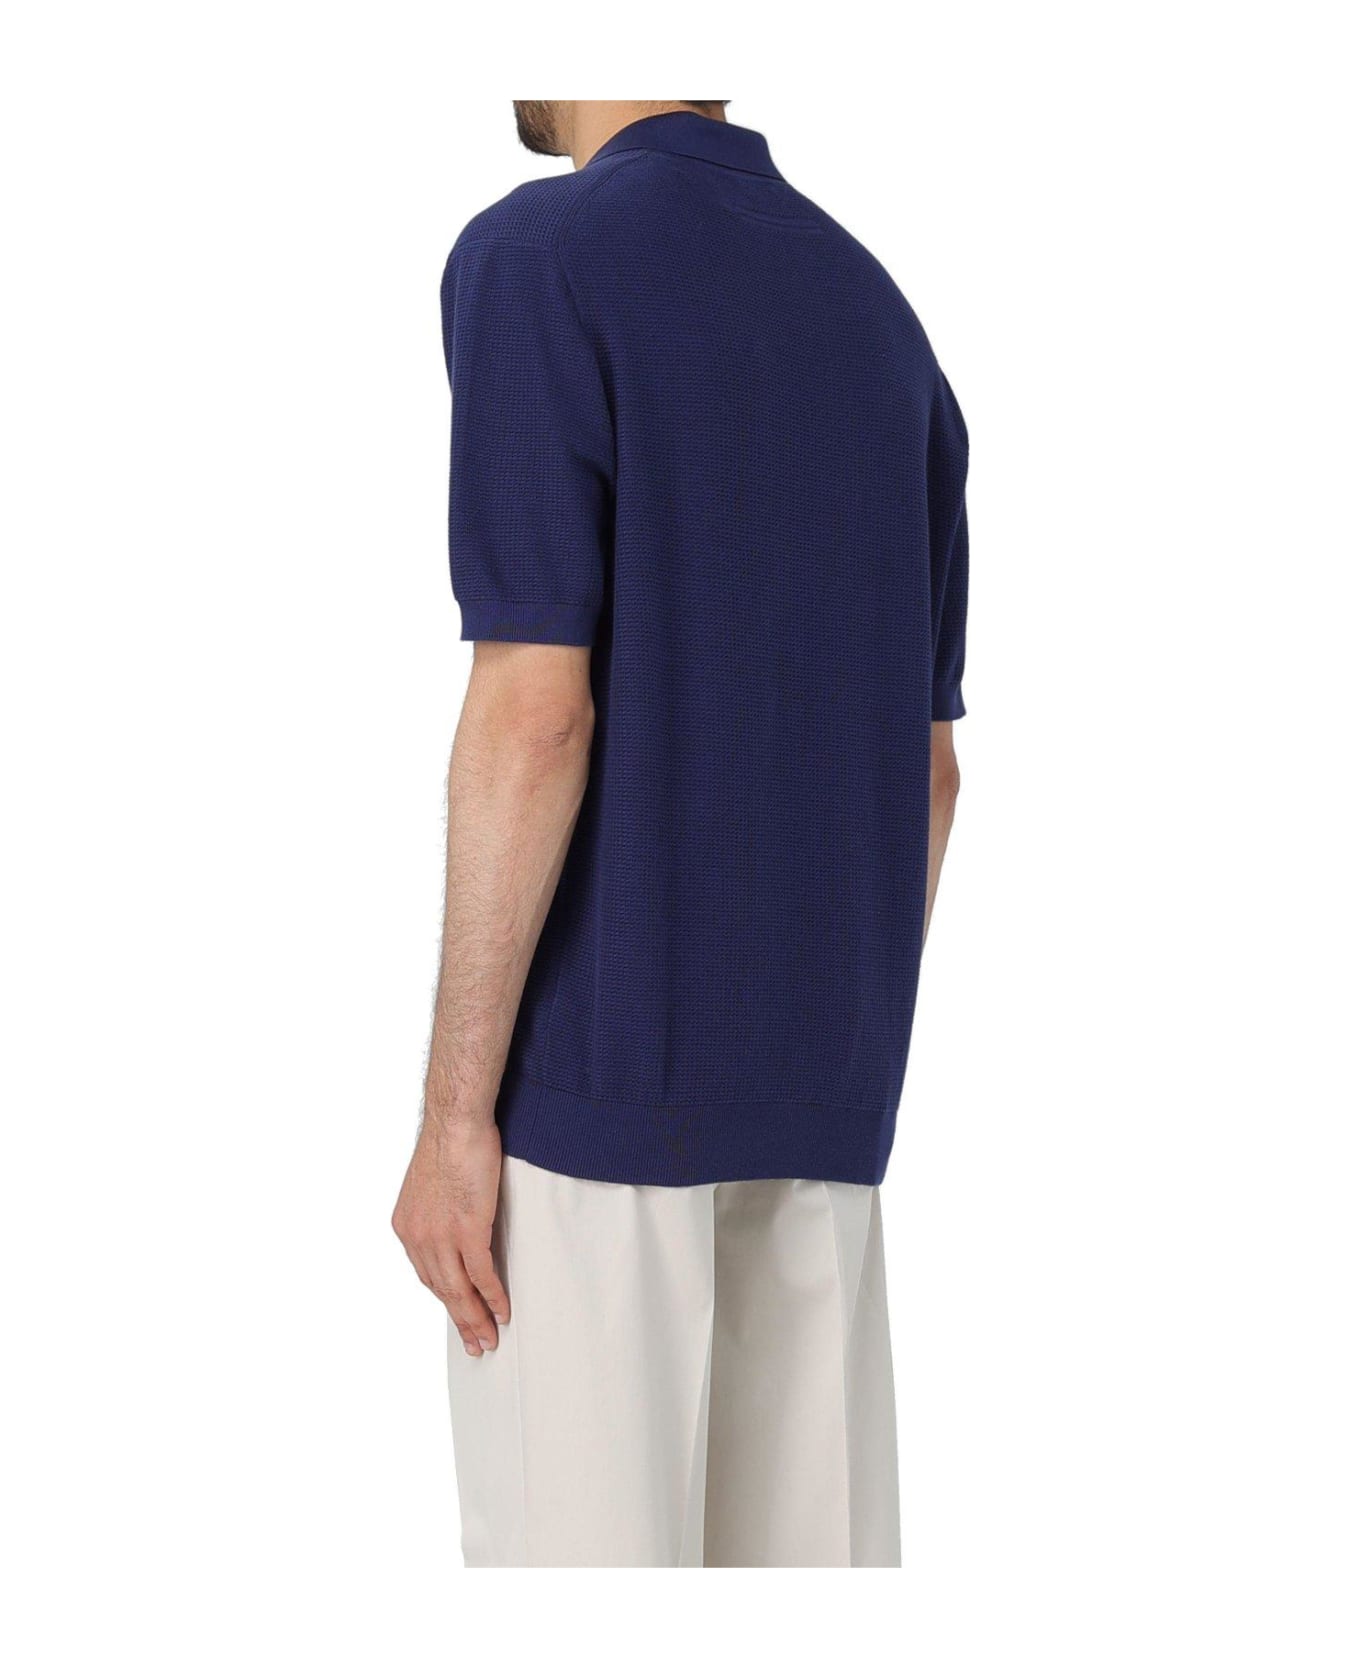 Zegna Short Sleeved Knitted Polo Shirt Zegna - MEDIUM BLUE シャツ